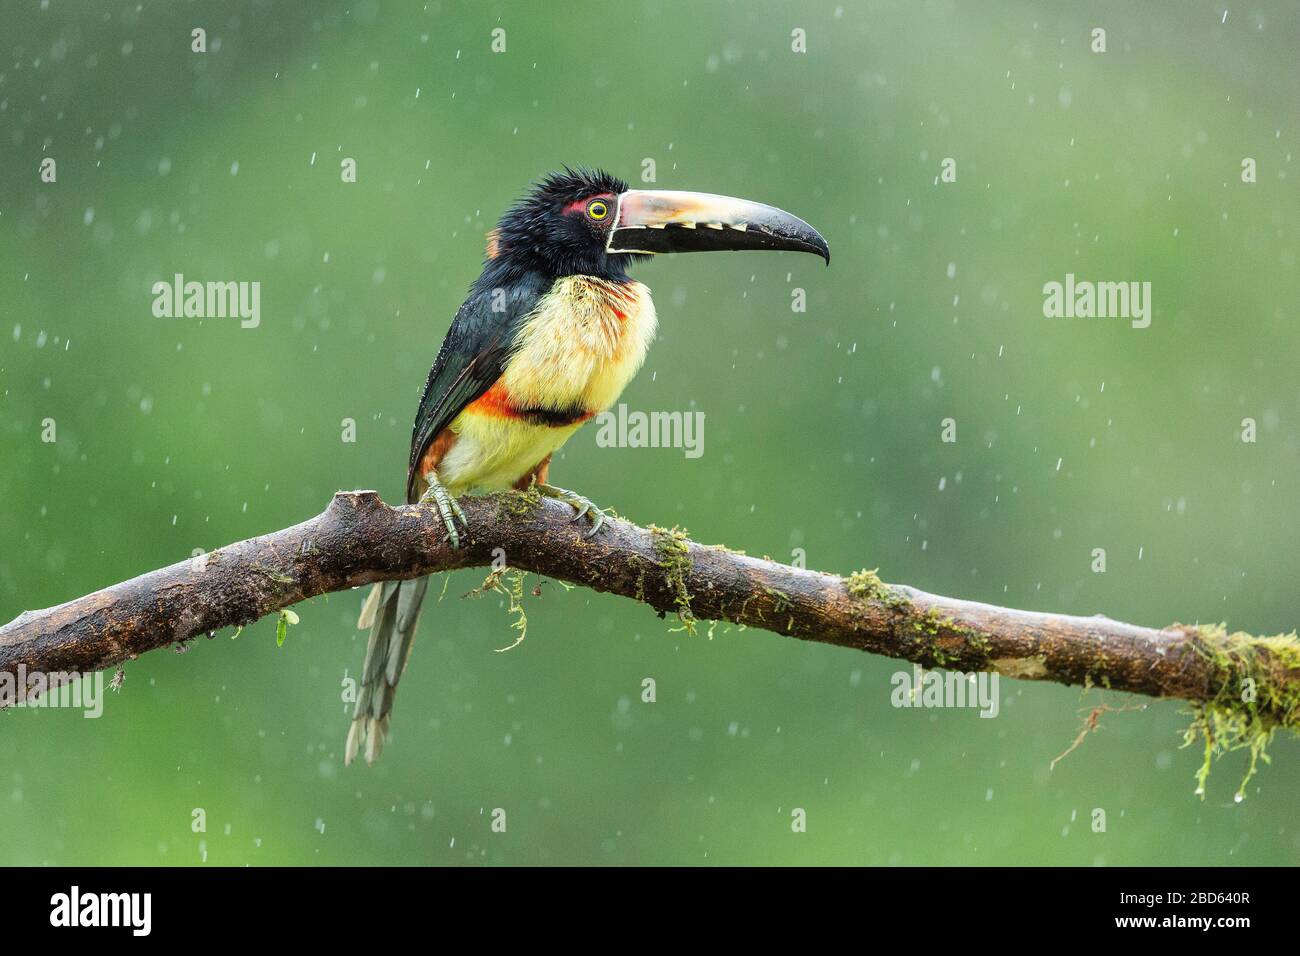 A Collared Aracari (Pteroglossus torquatus) perched on a branch in Costa Rica rainforest Stock Photo